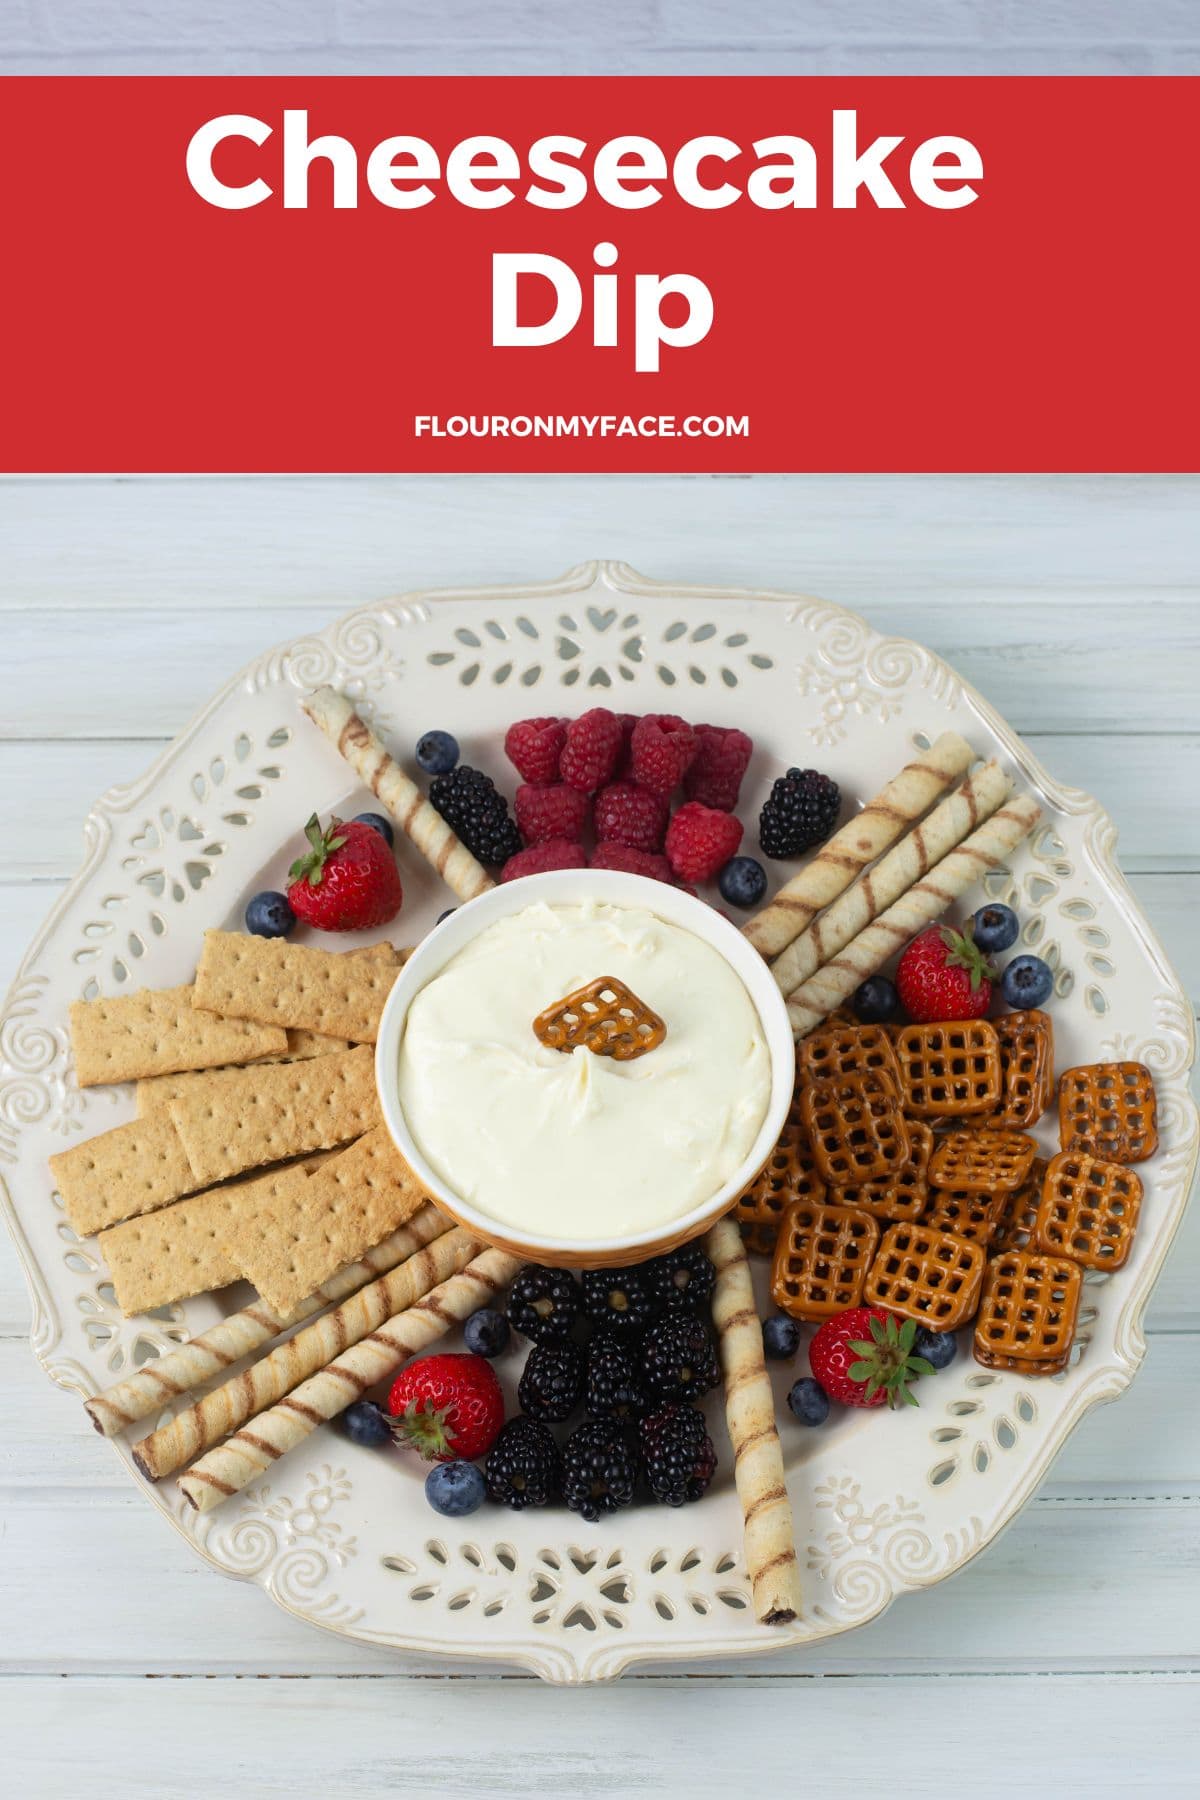 Long vertical image of a Cheesecake dip platter.